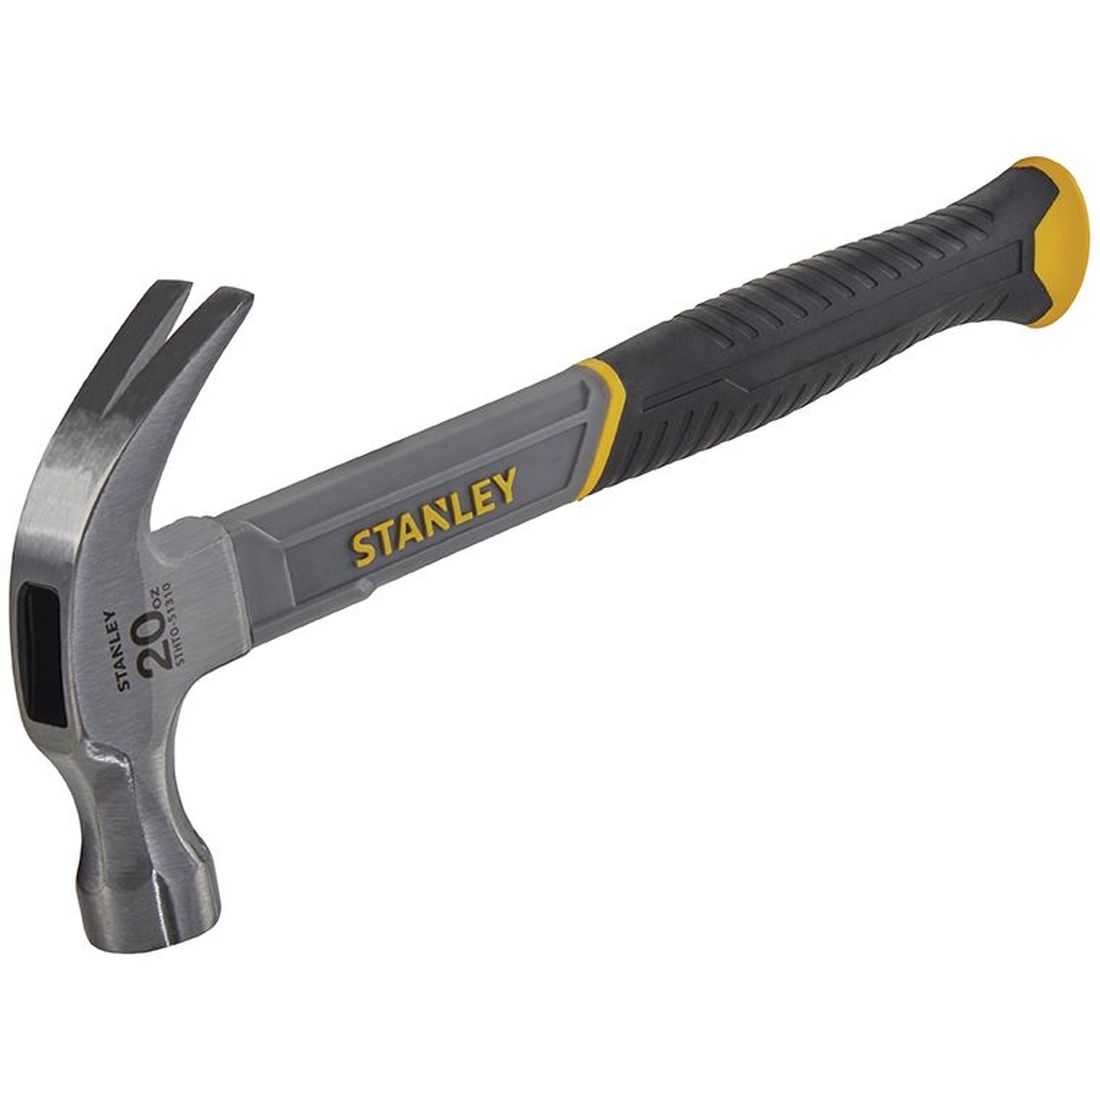 STANLEY Curved Claw Hammer Fibreglass Shaft 570g (20oz)                                 